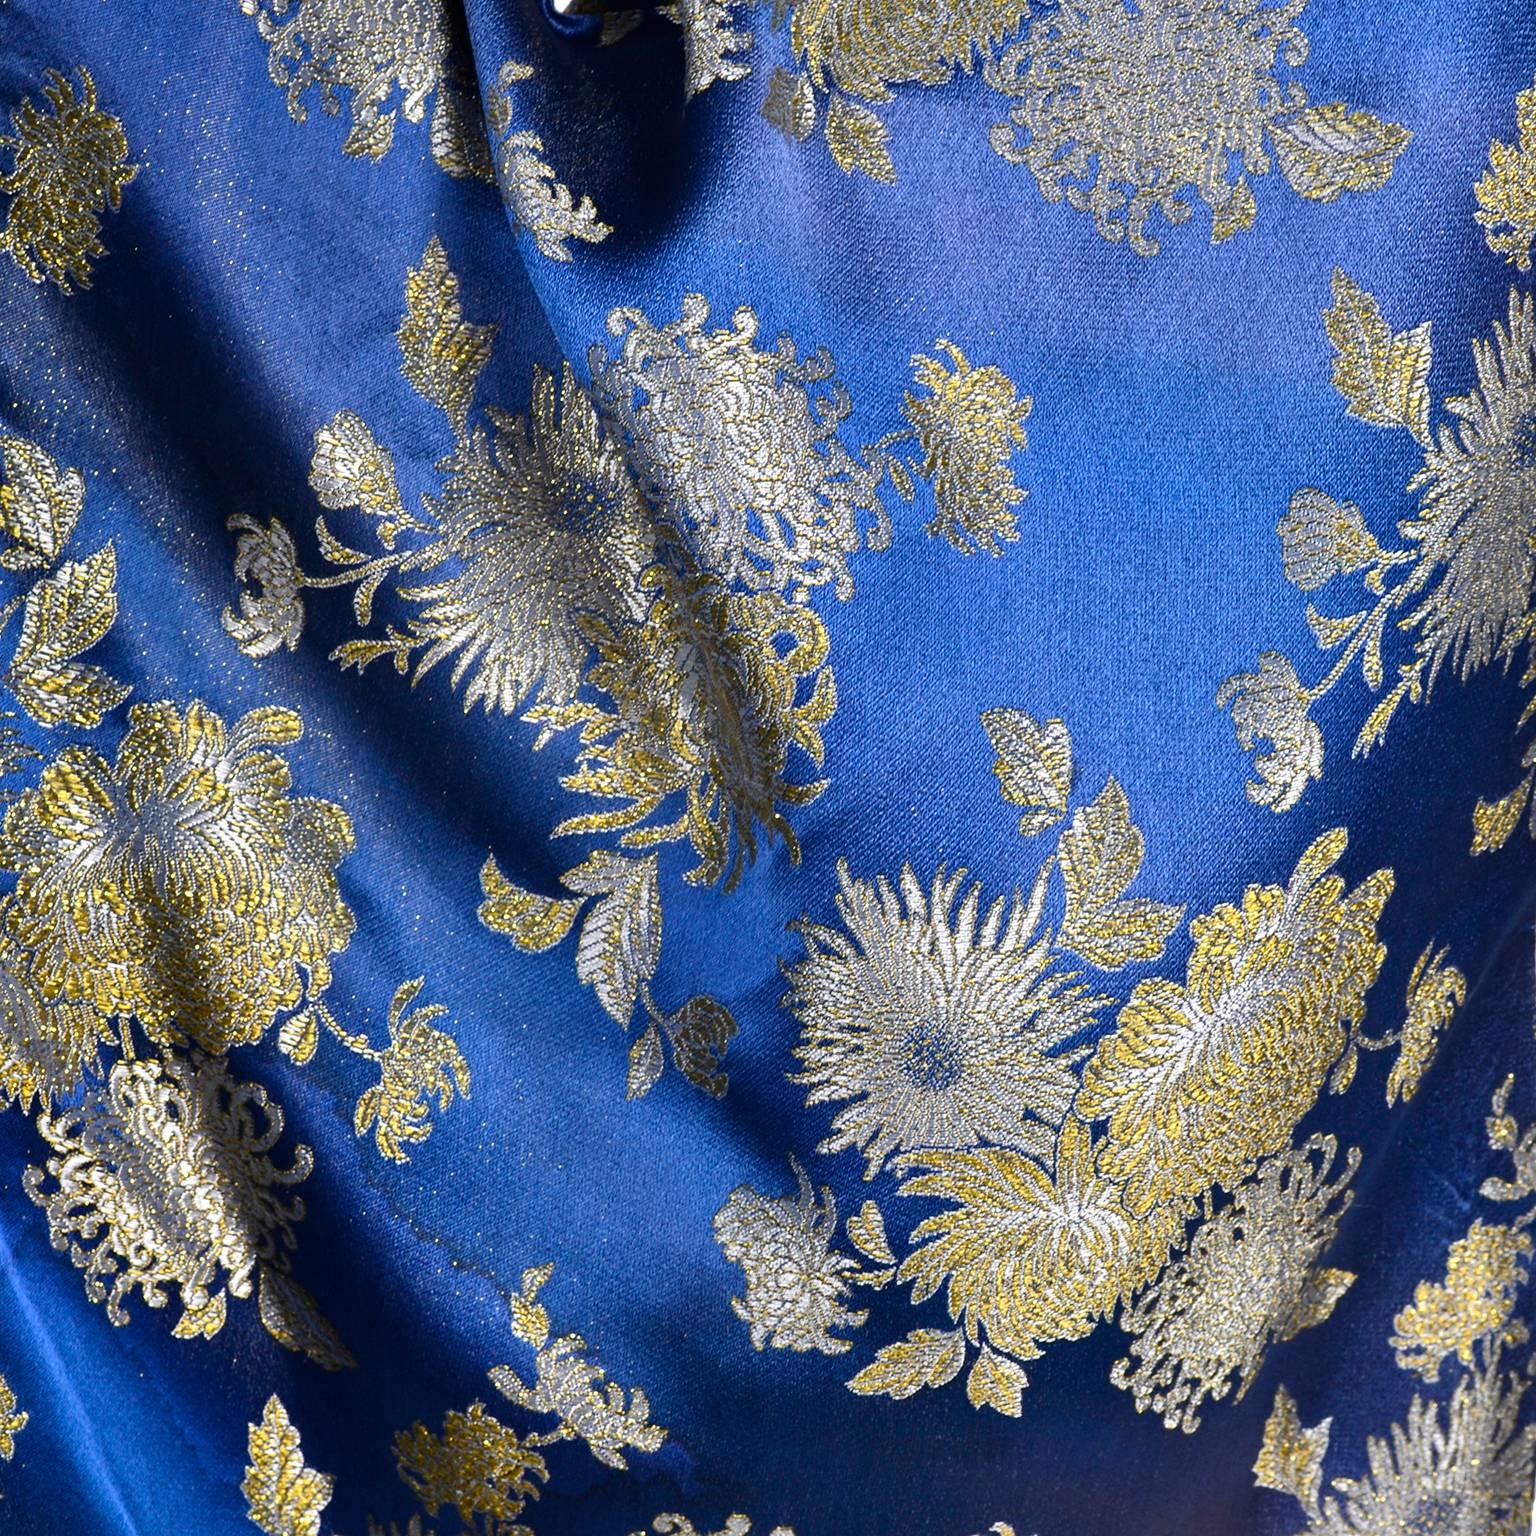 Women's Japanese Vintage Kimono Robe in Blue Silk Gold Metallic chrysanthemum Embroidery